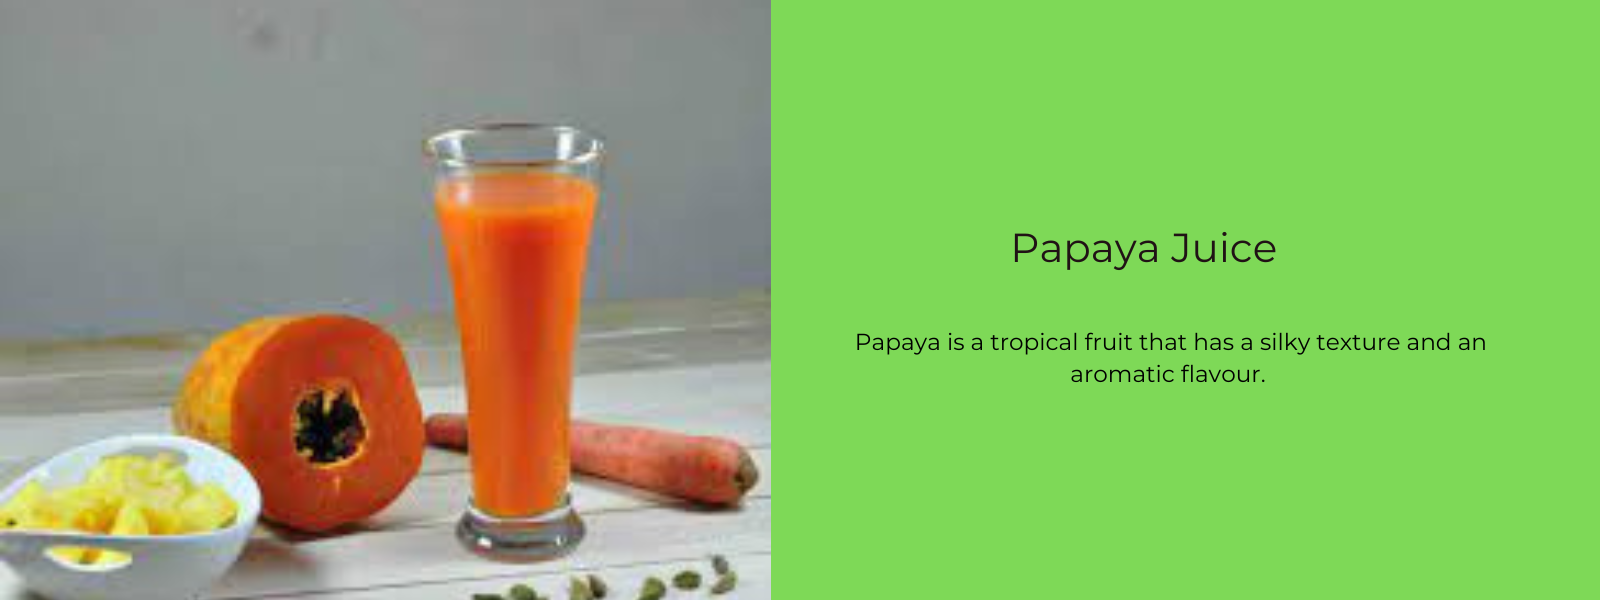 Papaya Juice – Health Benefits, Uses and Important Facts